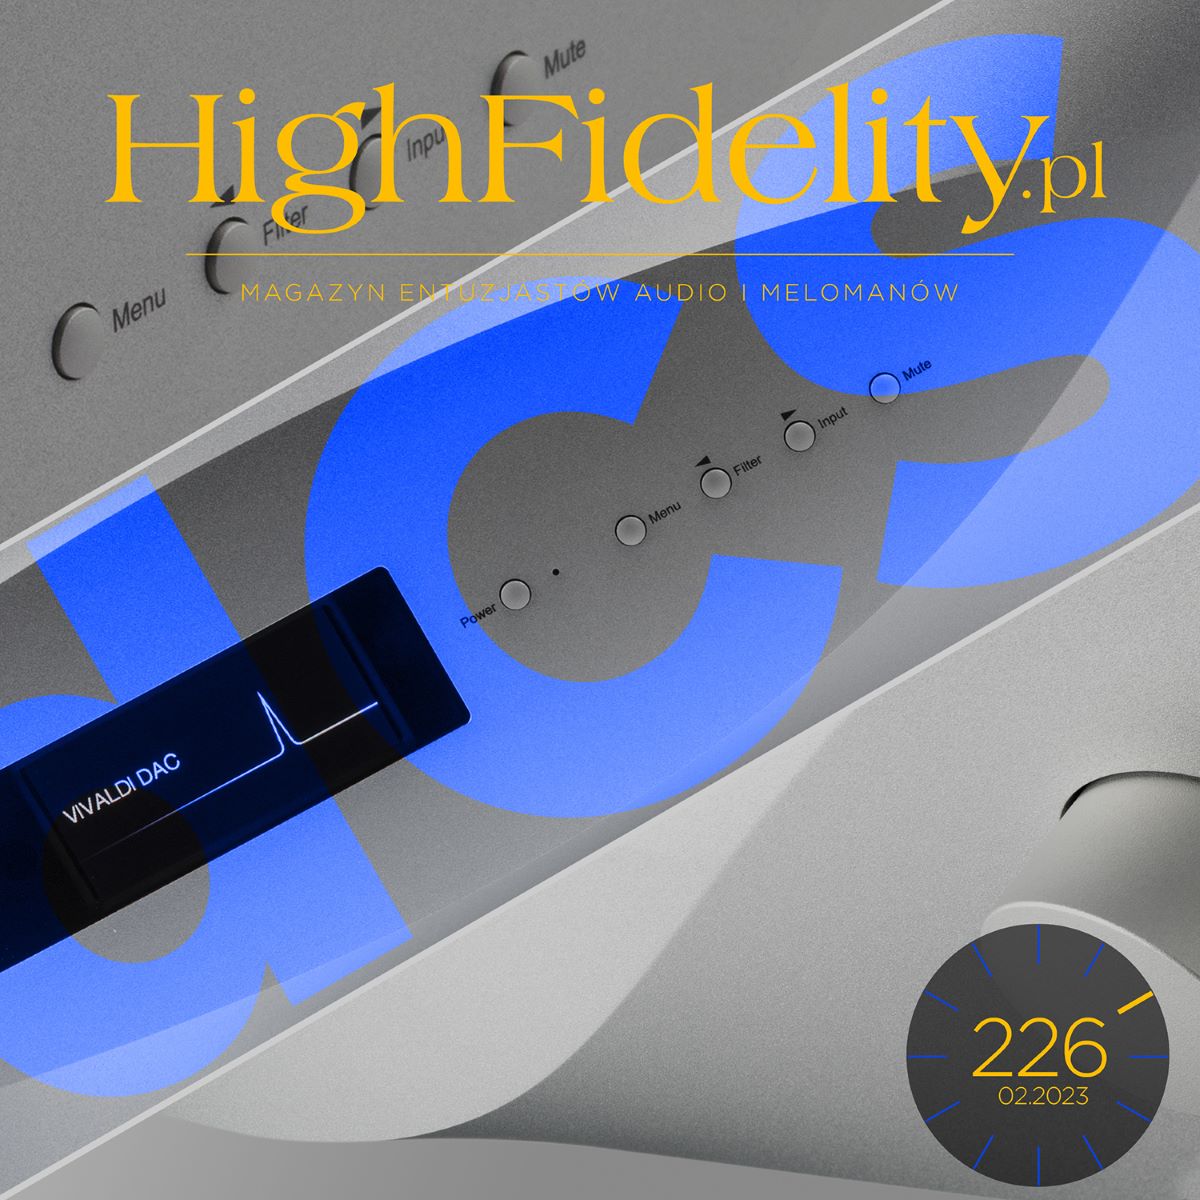 „High Fidelity” № 226 ⸜ LUTY 2023